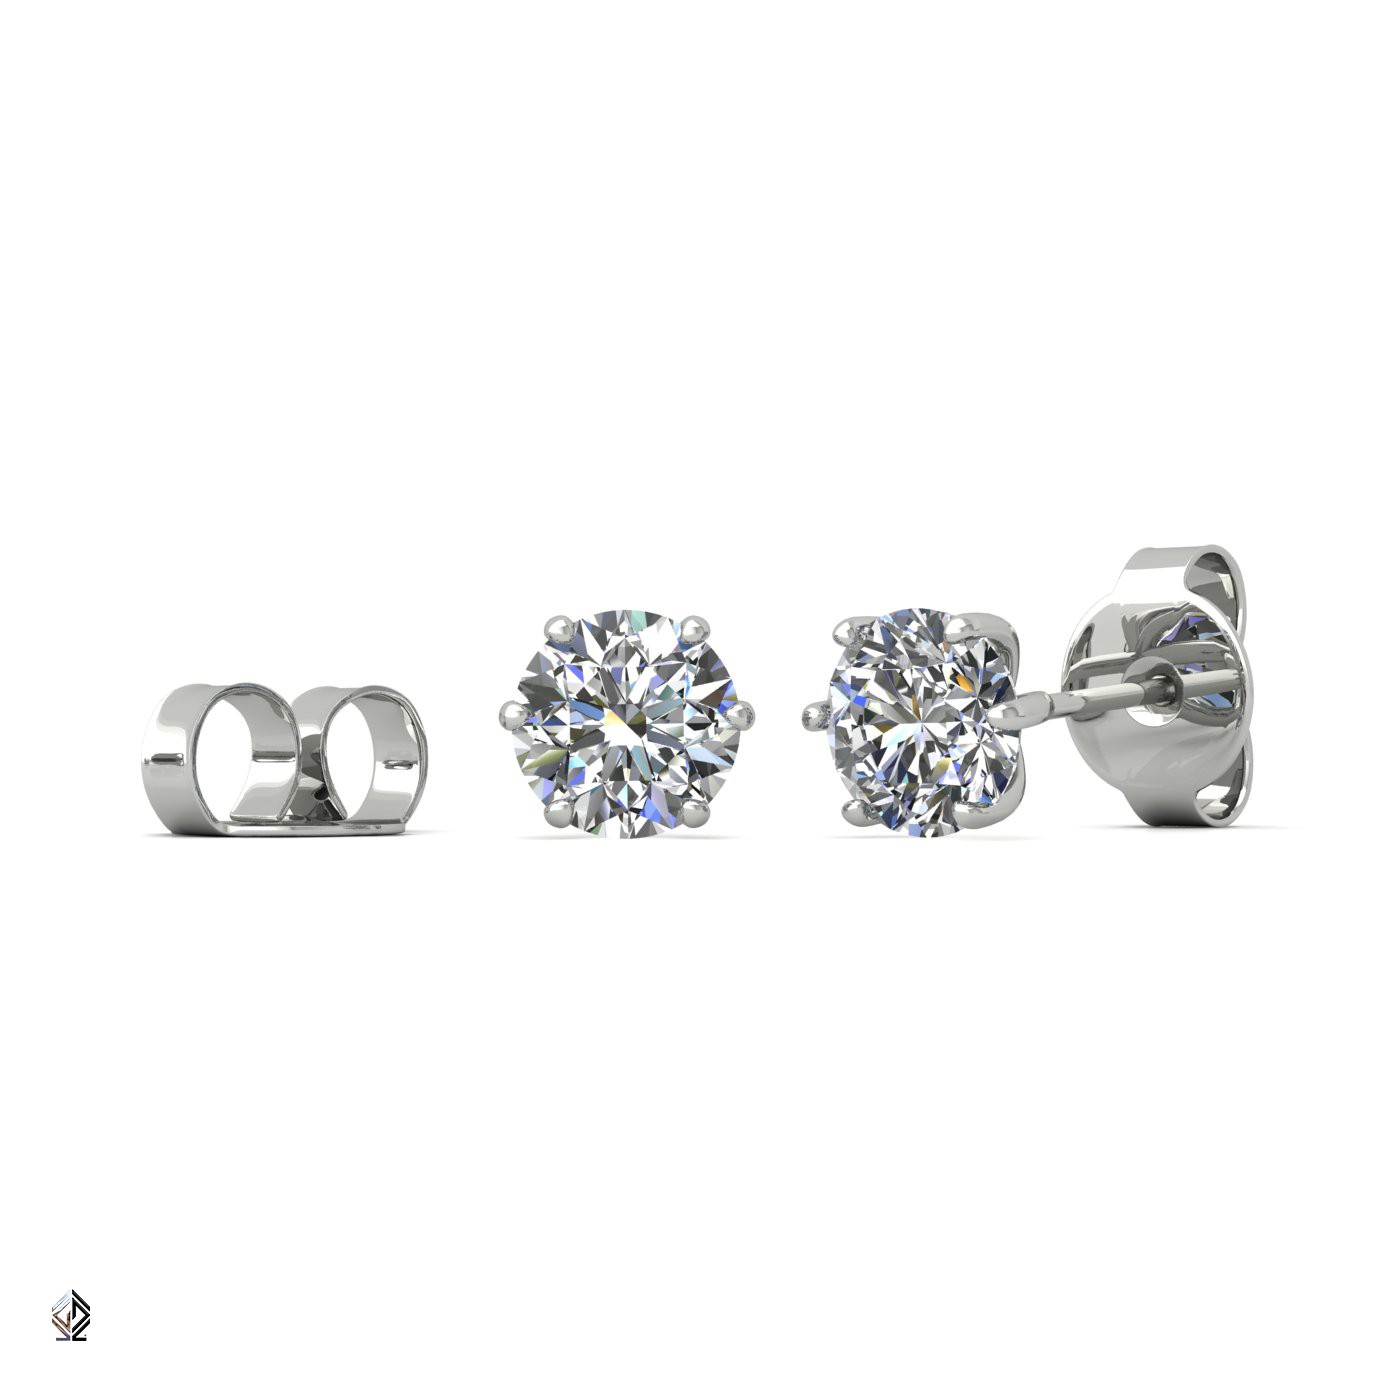 18k white gold 0,3 ct each (0,6 tcw) 6 prongs round shape diamond earrings